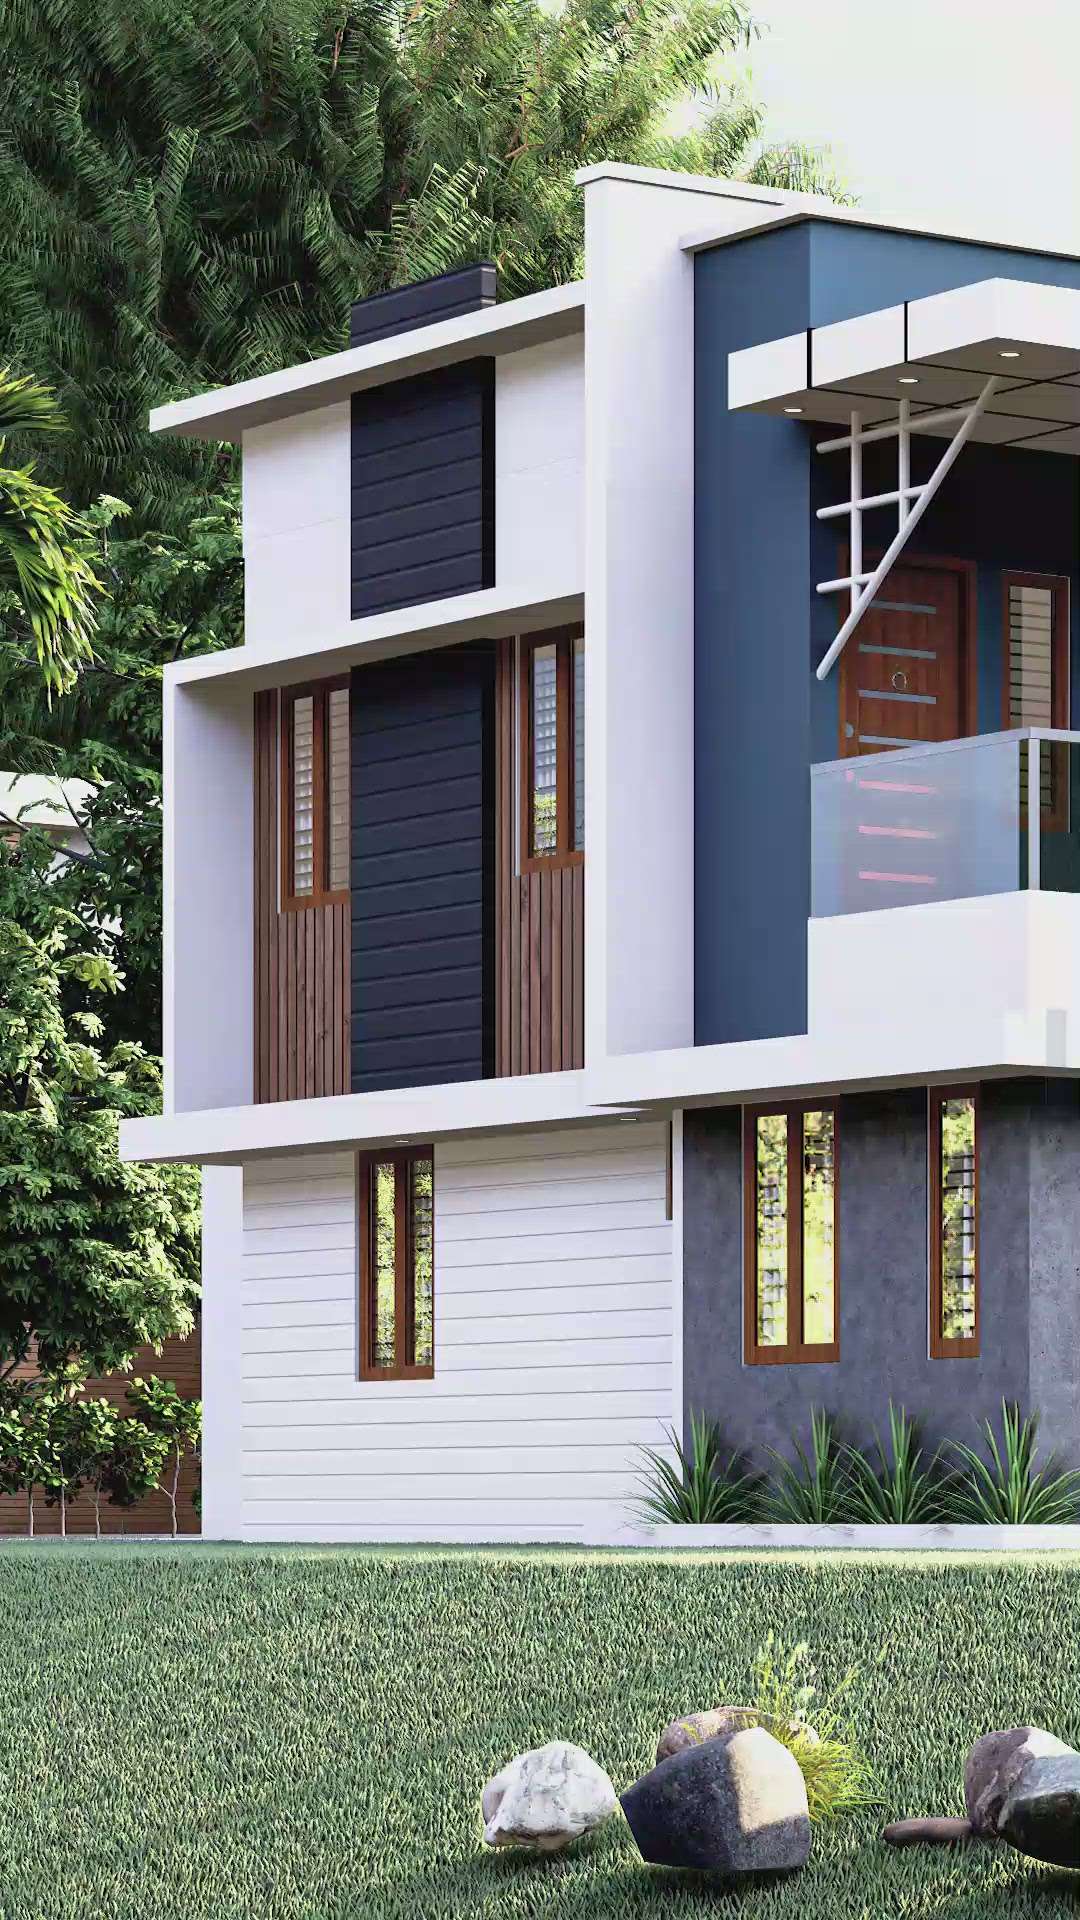 New 3D Design Exterior.🥰🥰
Contact Us +91 8848721023
#trivandrum #construction #home #designs #inetriordesigning #iqdesignshome #iqdesignsconstruction #exterior #3d